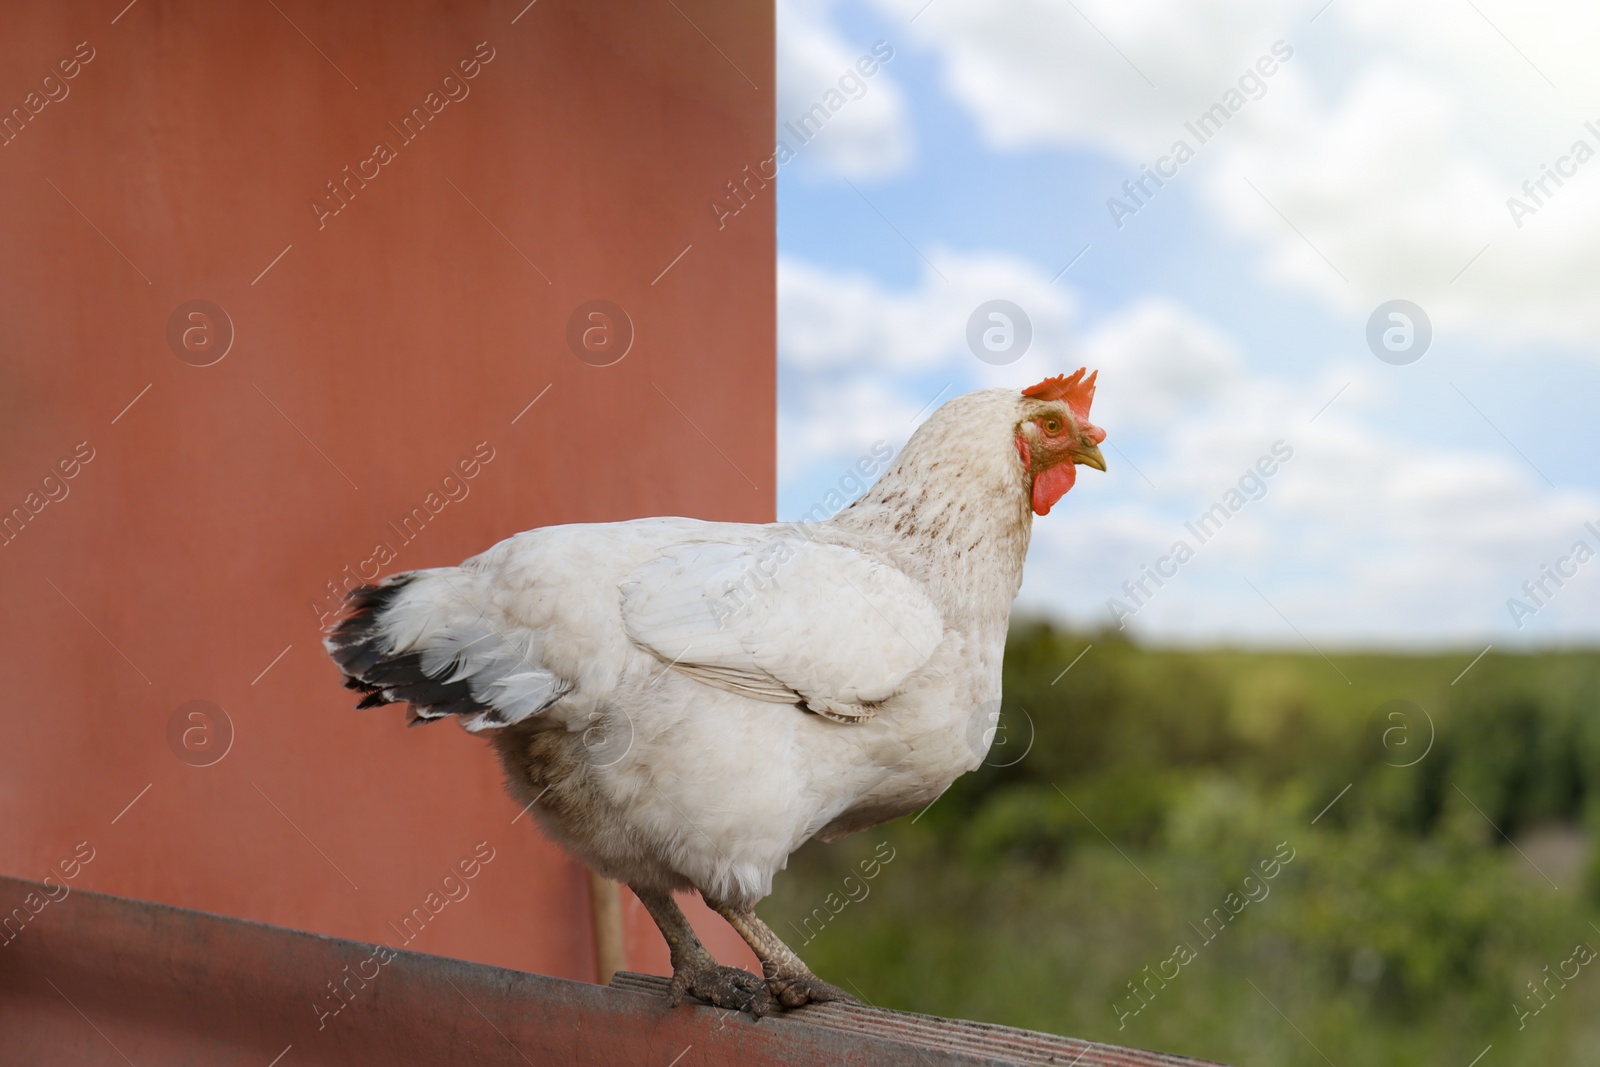 Photo of Beautiful white hen on fence in farmyard. Free range chicken